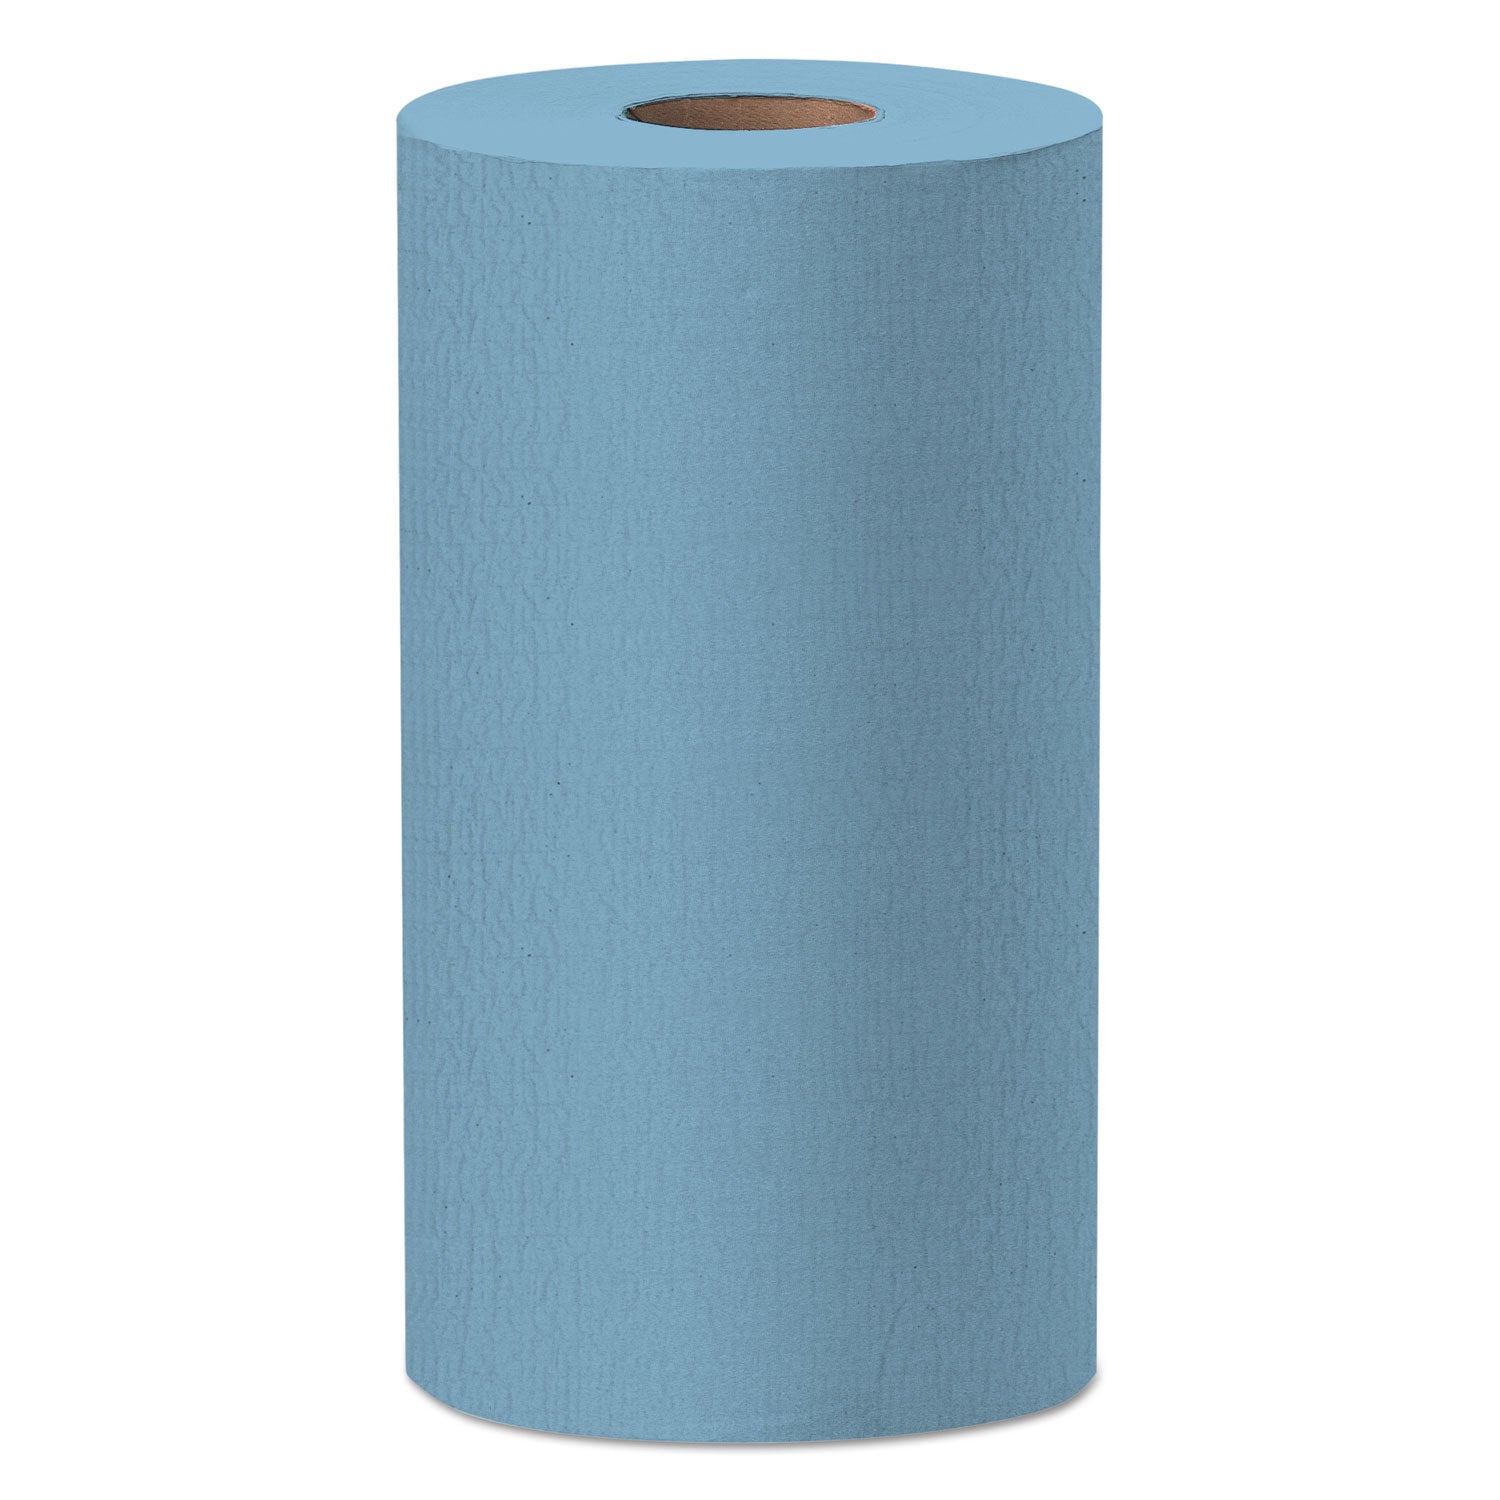 general-clean-x60-cloths-small-roll-98-x-134-blue-130-roll-12-rolls-carton_kcc35411 - 1